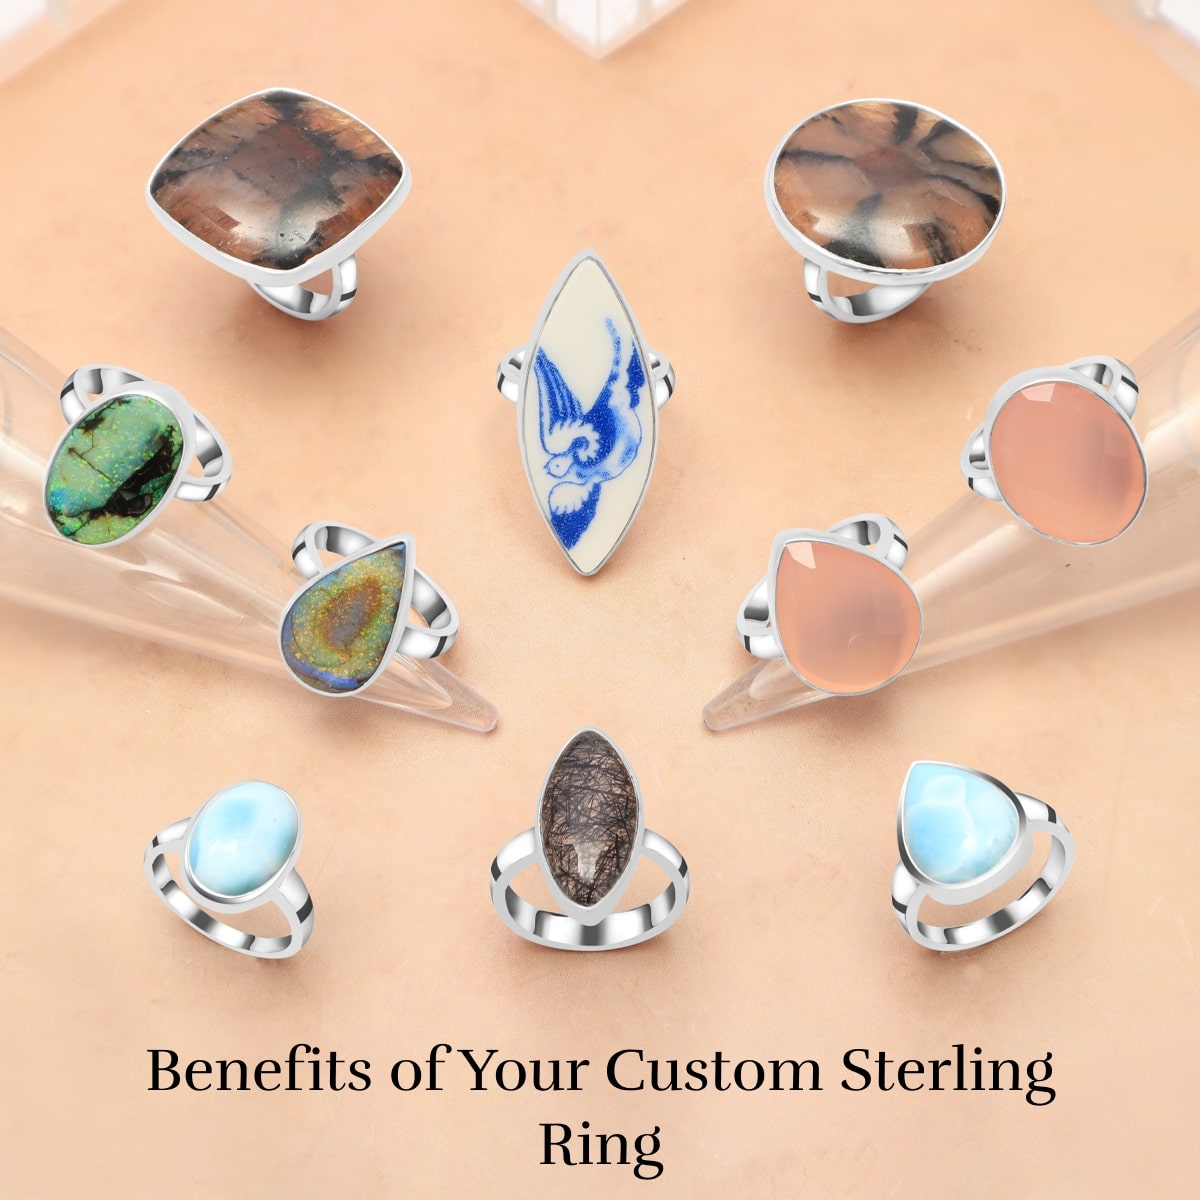 Buy Princess Cut Moissanite 5 Stone Ring in Rhodium Over Sterling Silver,  Sterling Silver Ring, Moissanite Ring, Princess Cut Gemstone Ring 2.15 ctw  at ShopLC.